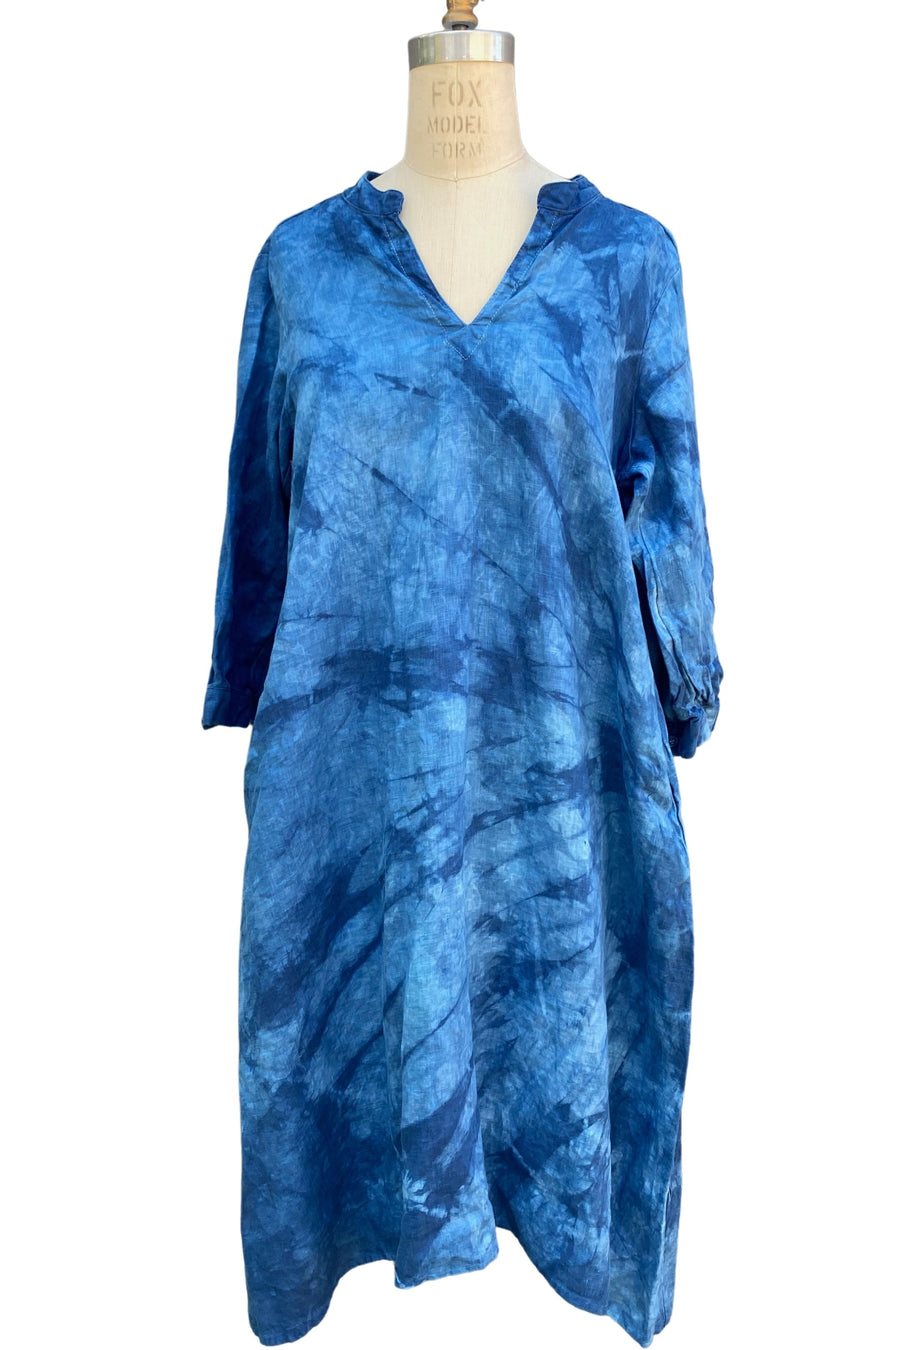 Dark Blue Linen Celeste Dress with Pockets